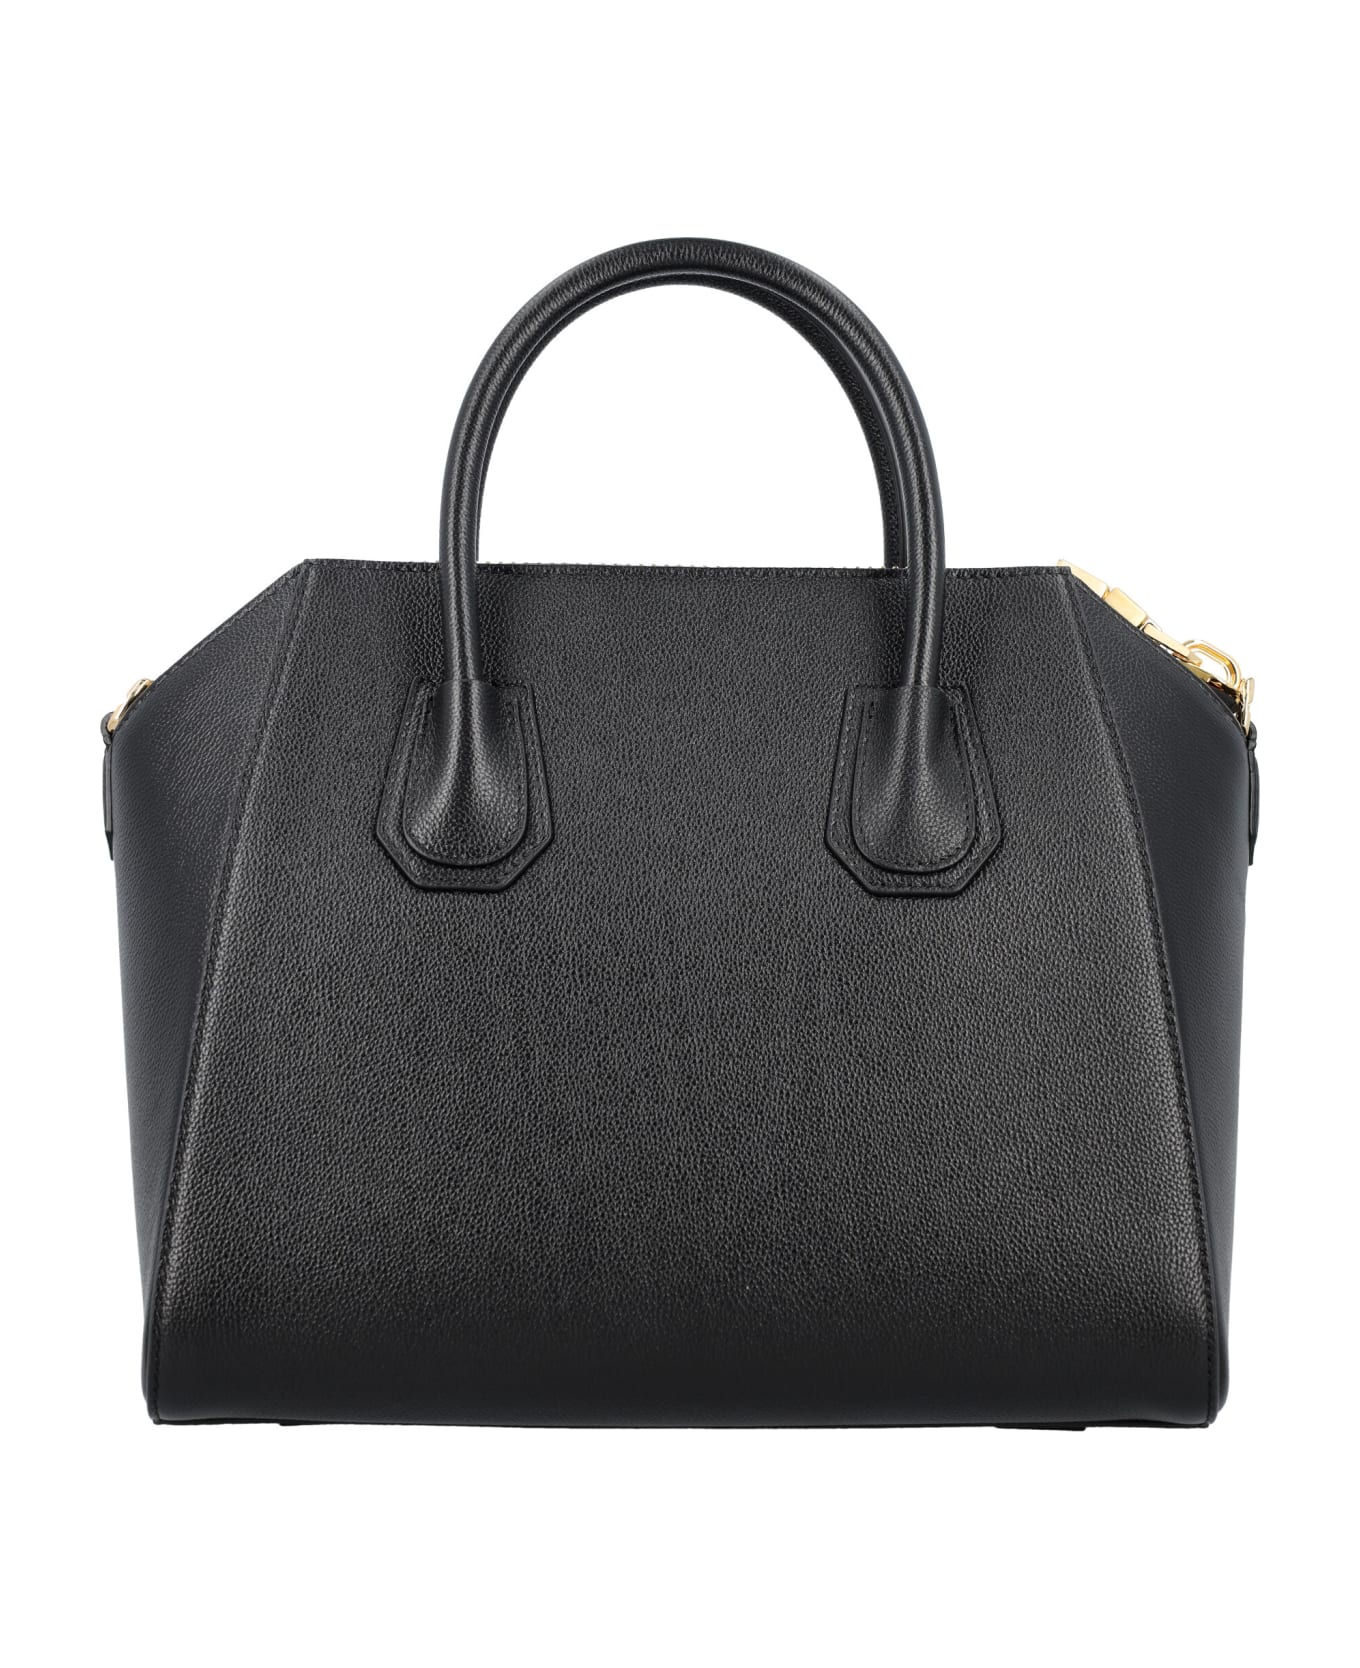 Givenchy Antigona Small Bag - BLACK